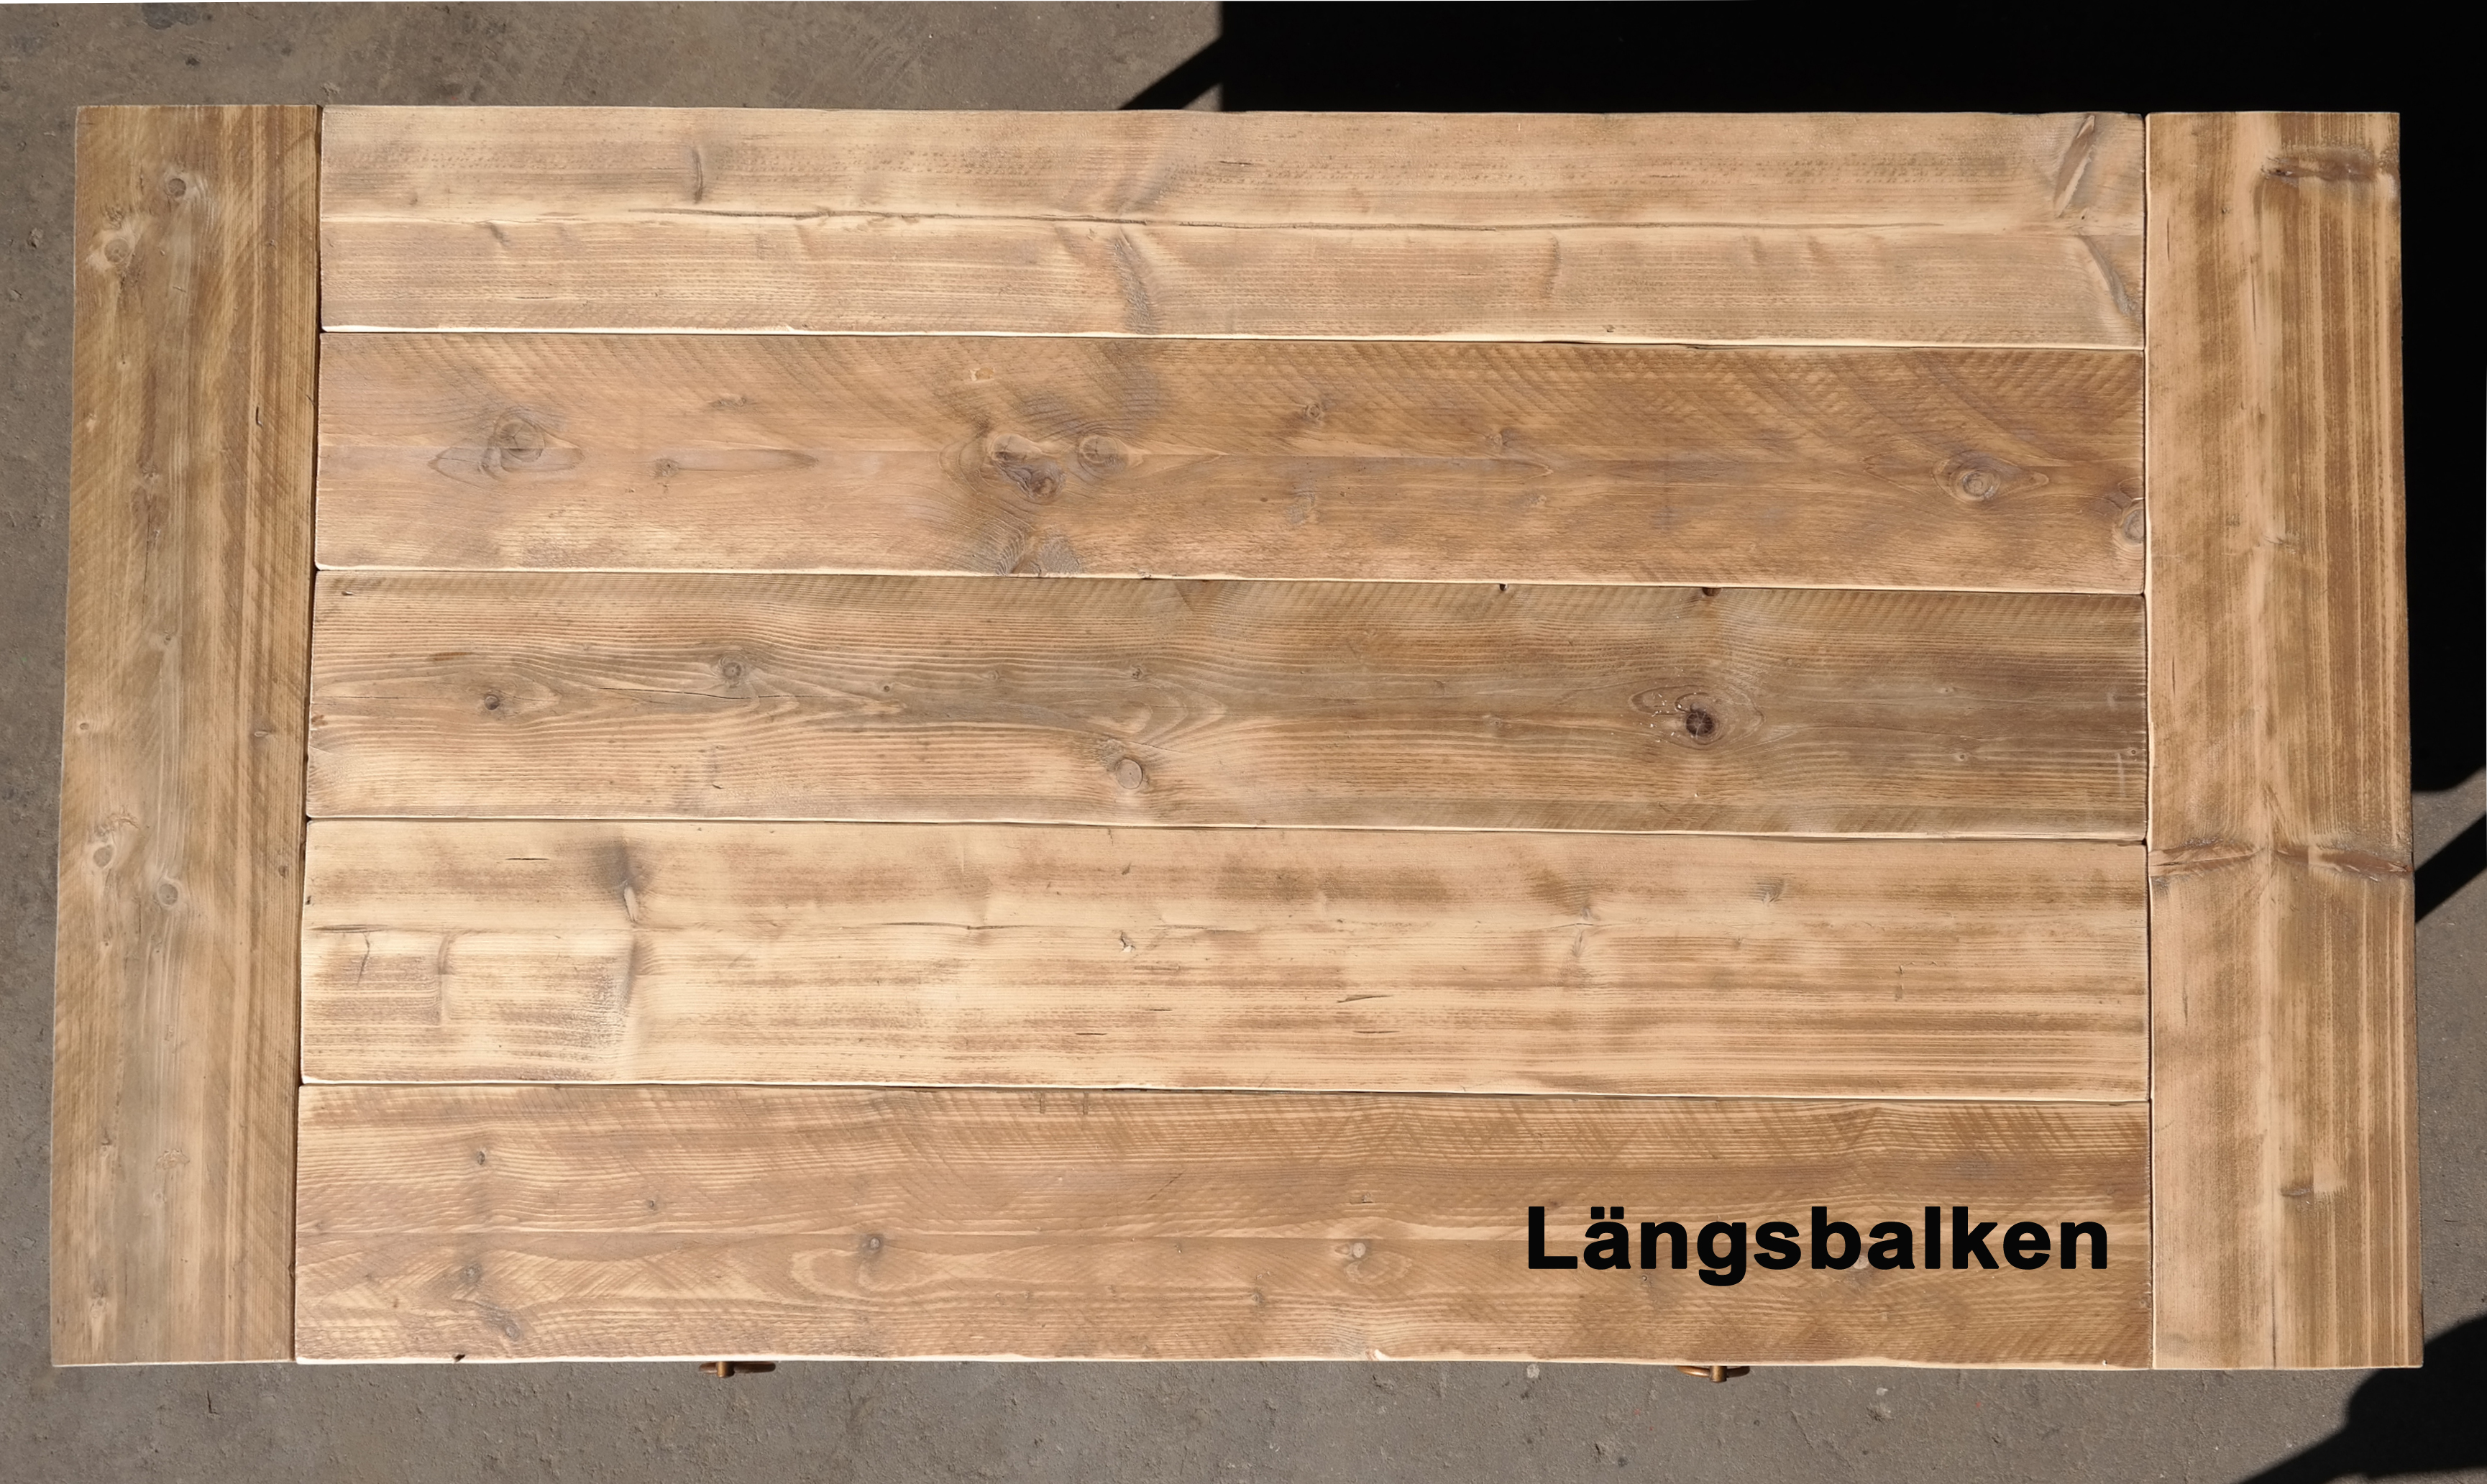 Moderne Tisch Modell TOSCANA Industrie Stil Massive Esstisch Gerüst Holz Steigerhout Loft Vintage Ga